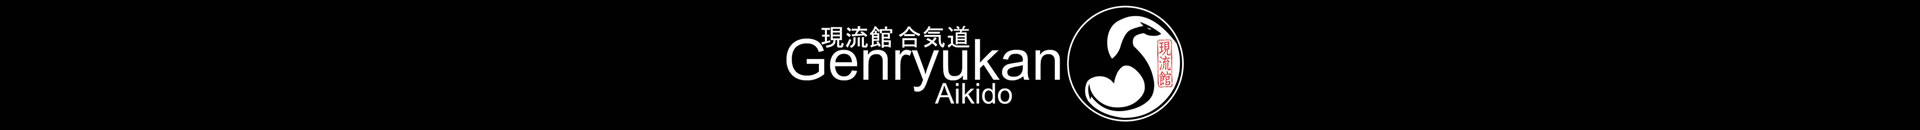 Yonkyo Course at Gowaryu Aikido Dojo